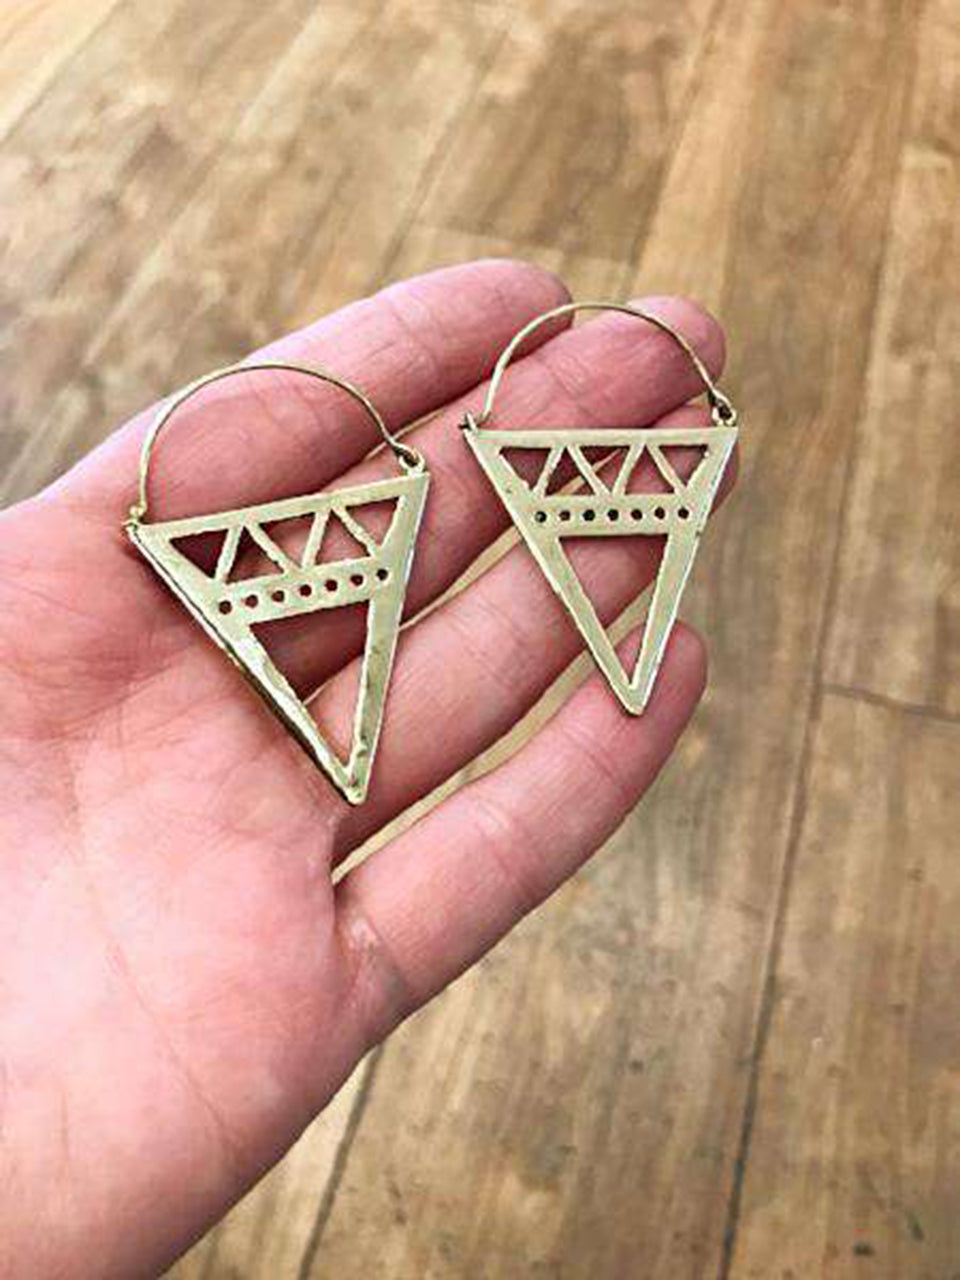 Triangle Statement Earrings